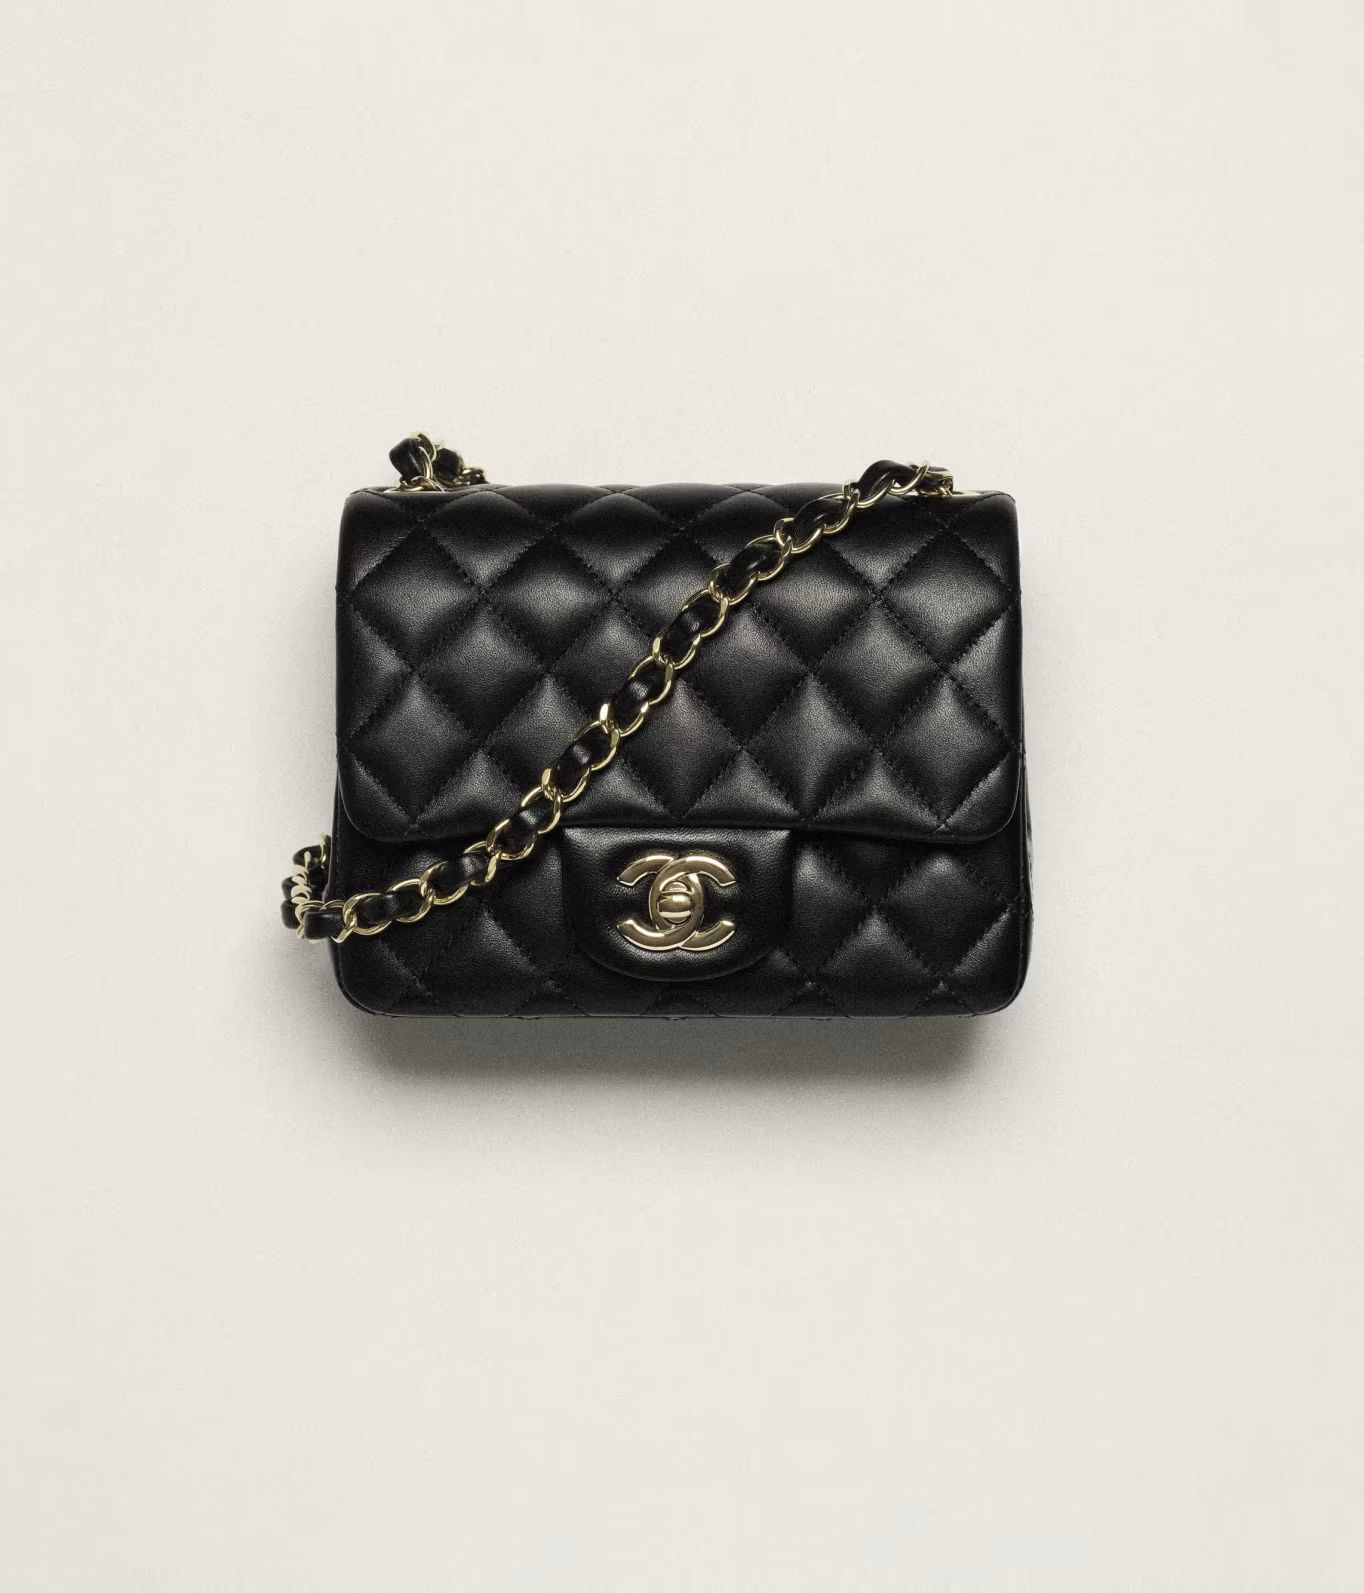 Mini classic handbag, Lambskin & gold-tone metal, black — Fashion | CHANEL | Chanel, Inc. (US)